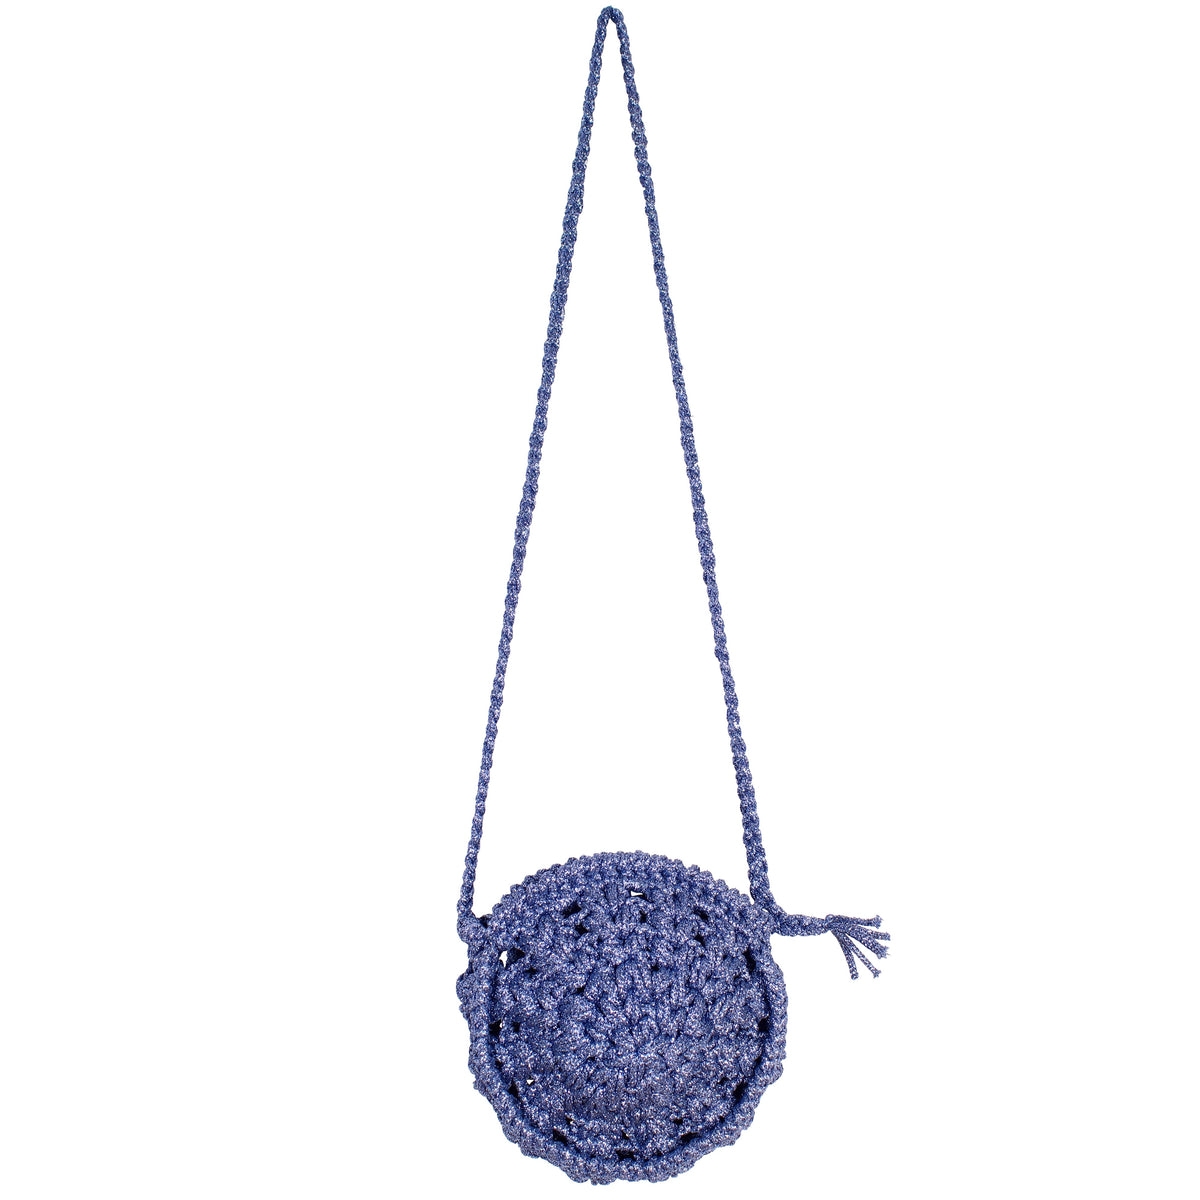 Maria La Rosa Arnica Irisé Crochet Bag in Pale Blue